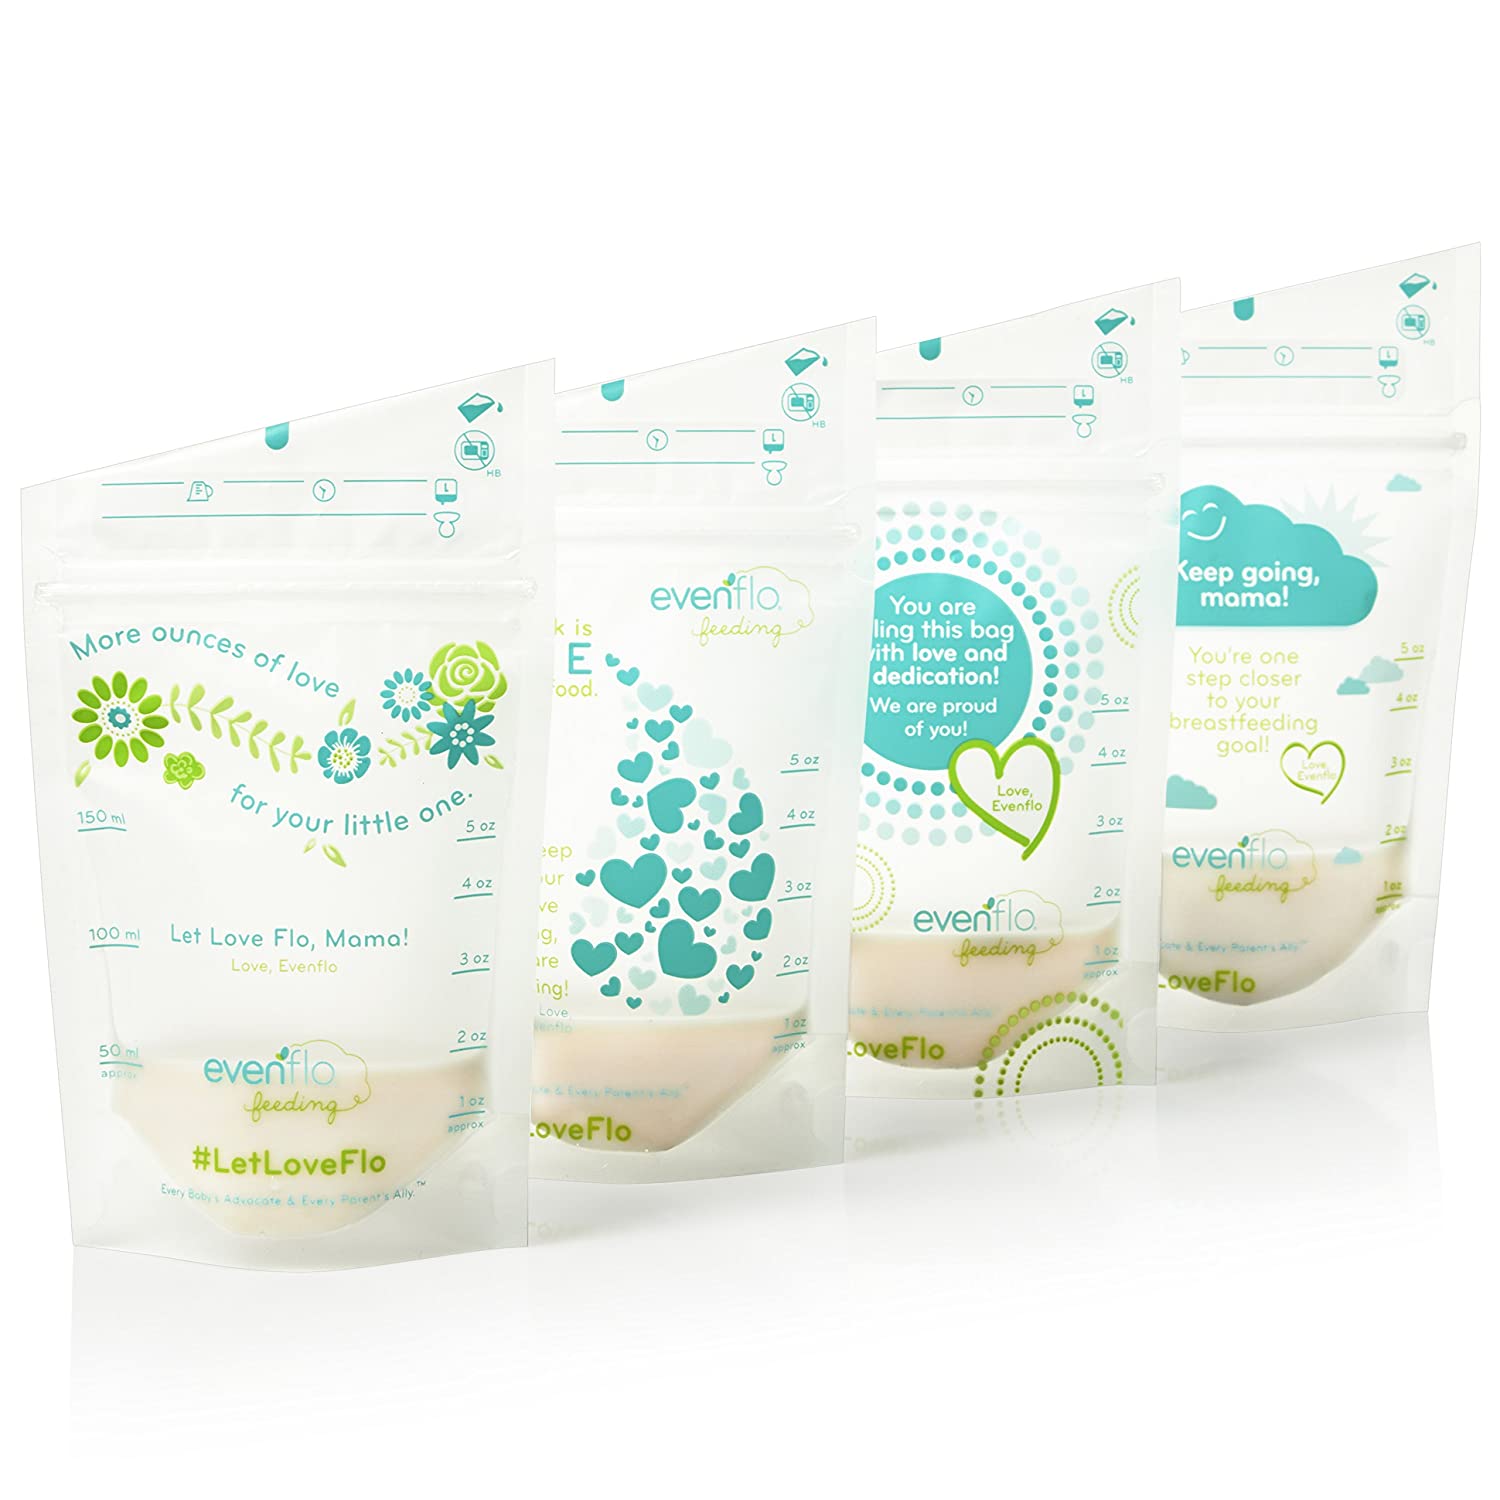 Evenflo Feeding Advanced Breast Milk Storage Bags for Breastfeeding - 5 Ounces (50 Count)